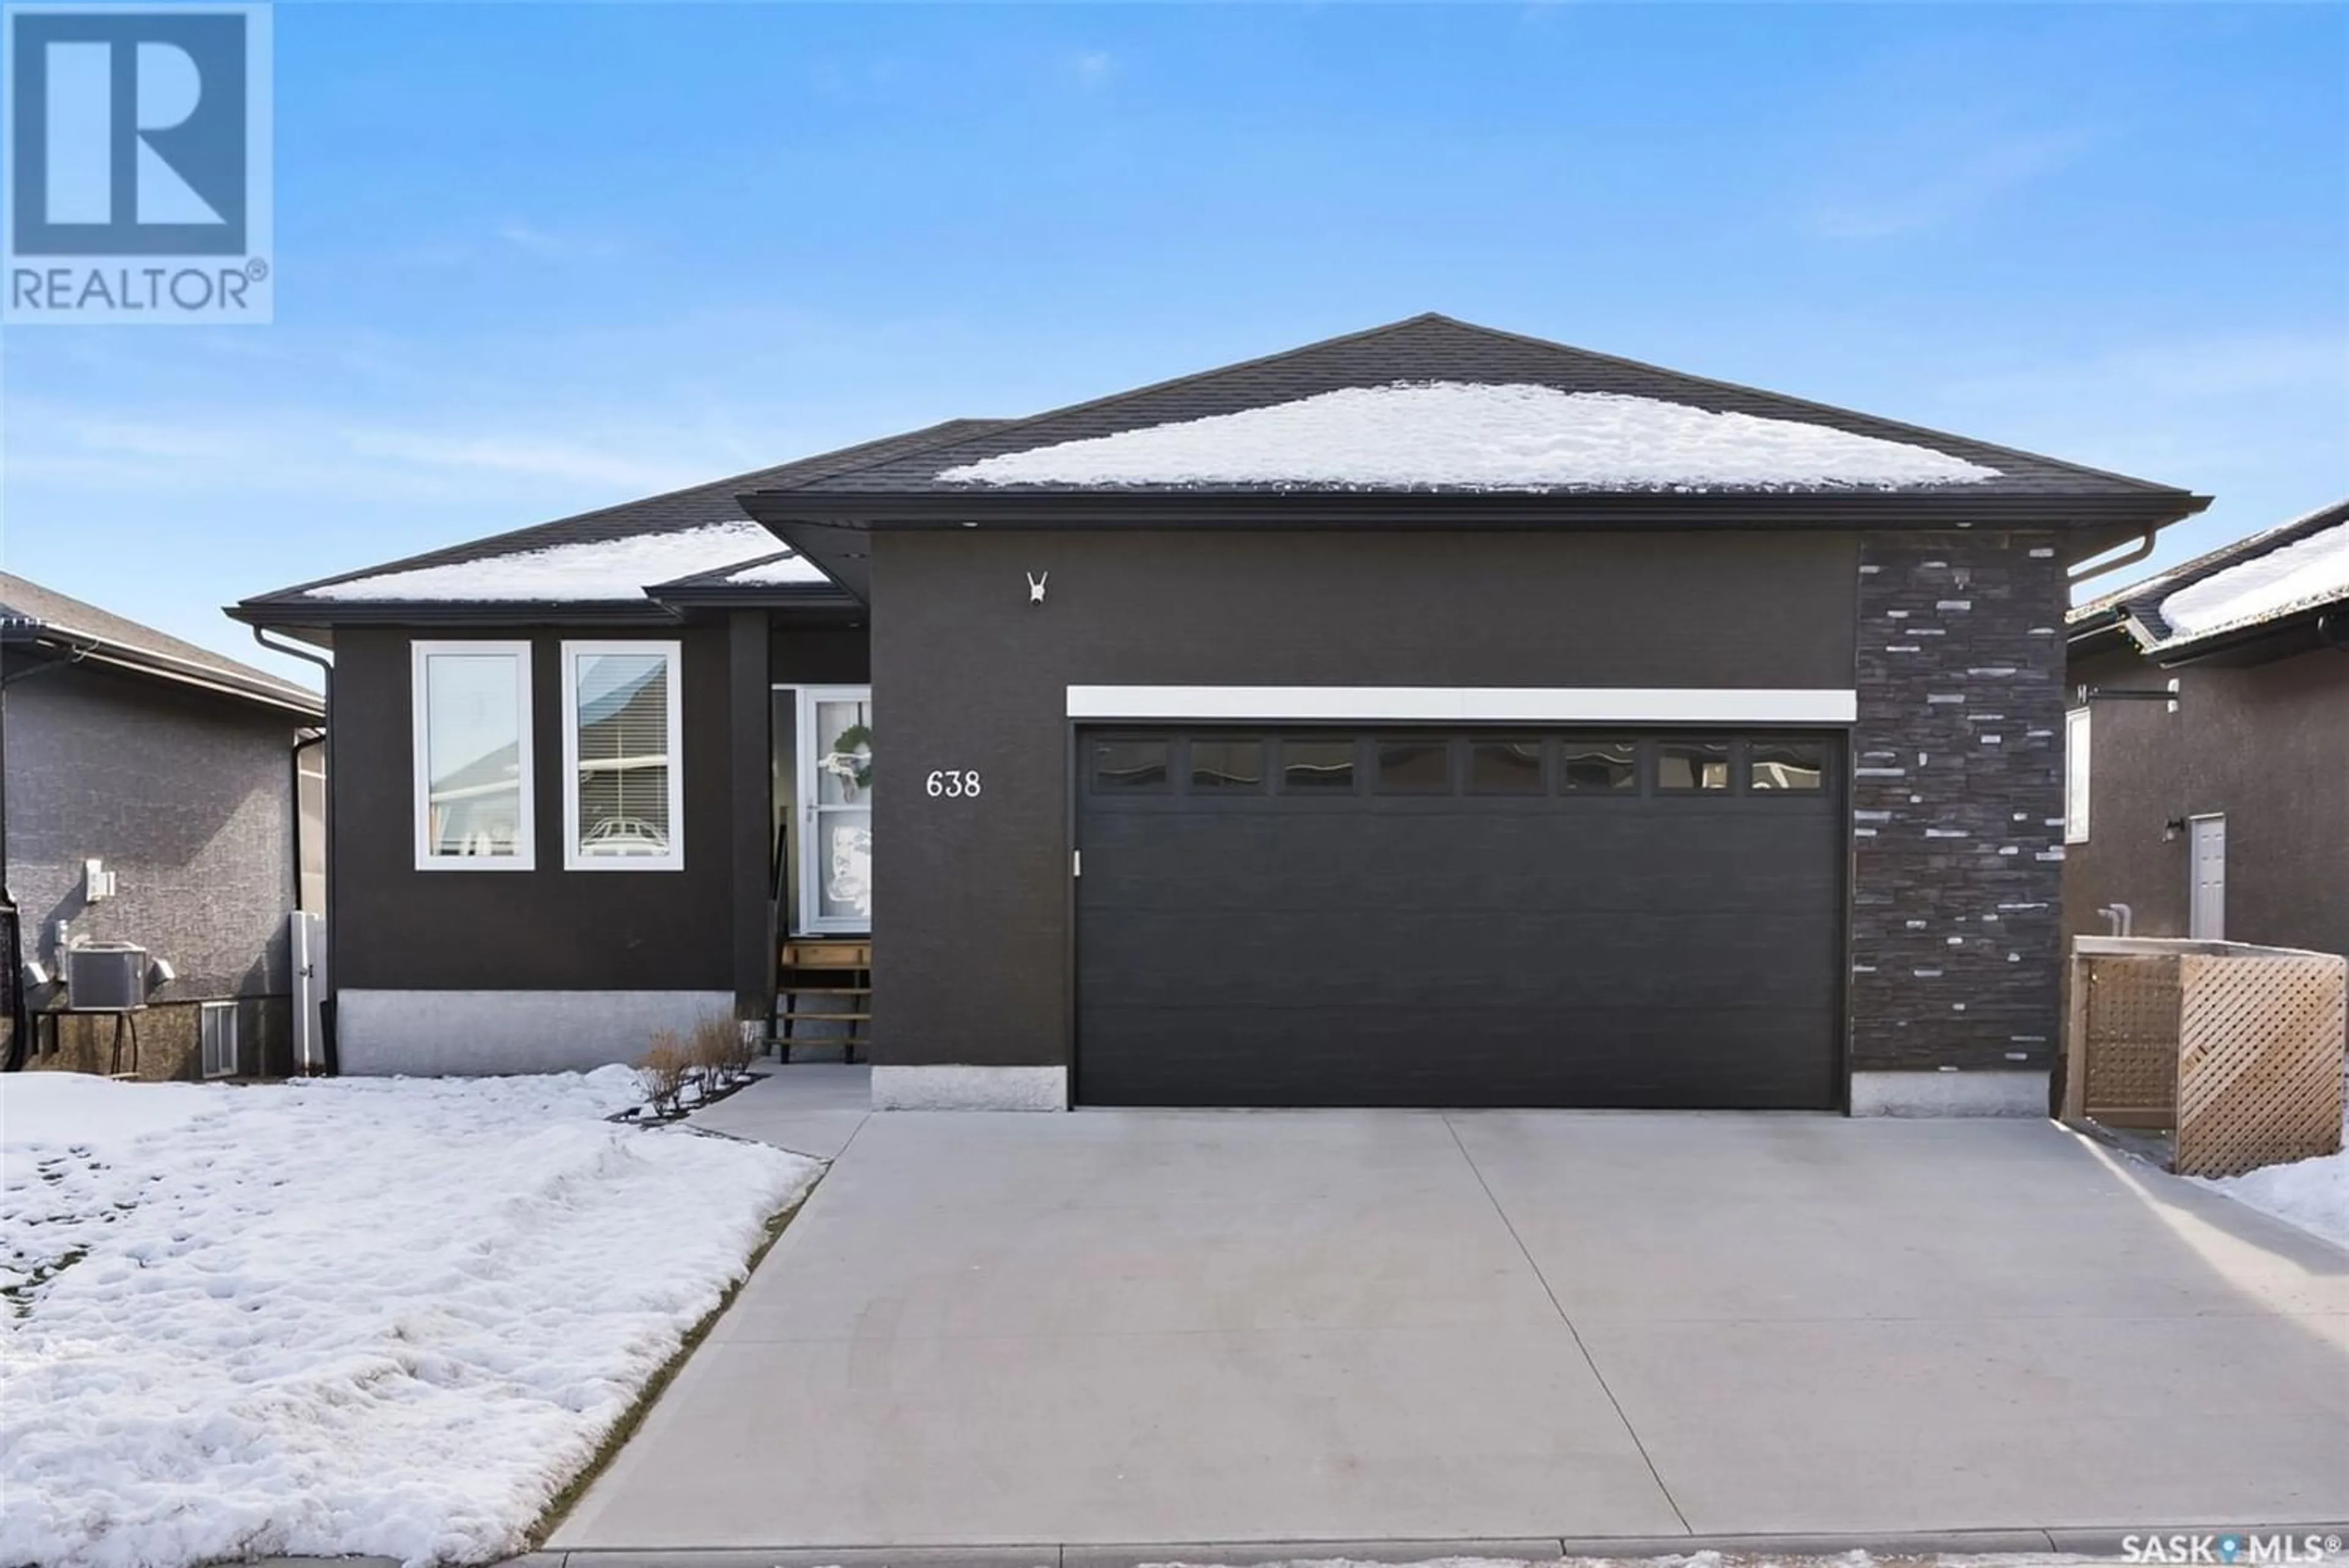 Home with vinyl exterior material for 638 Aspen CRESCENT, Pilot Butte Saskatchewan S0G3Z0